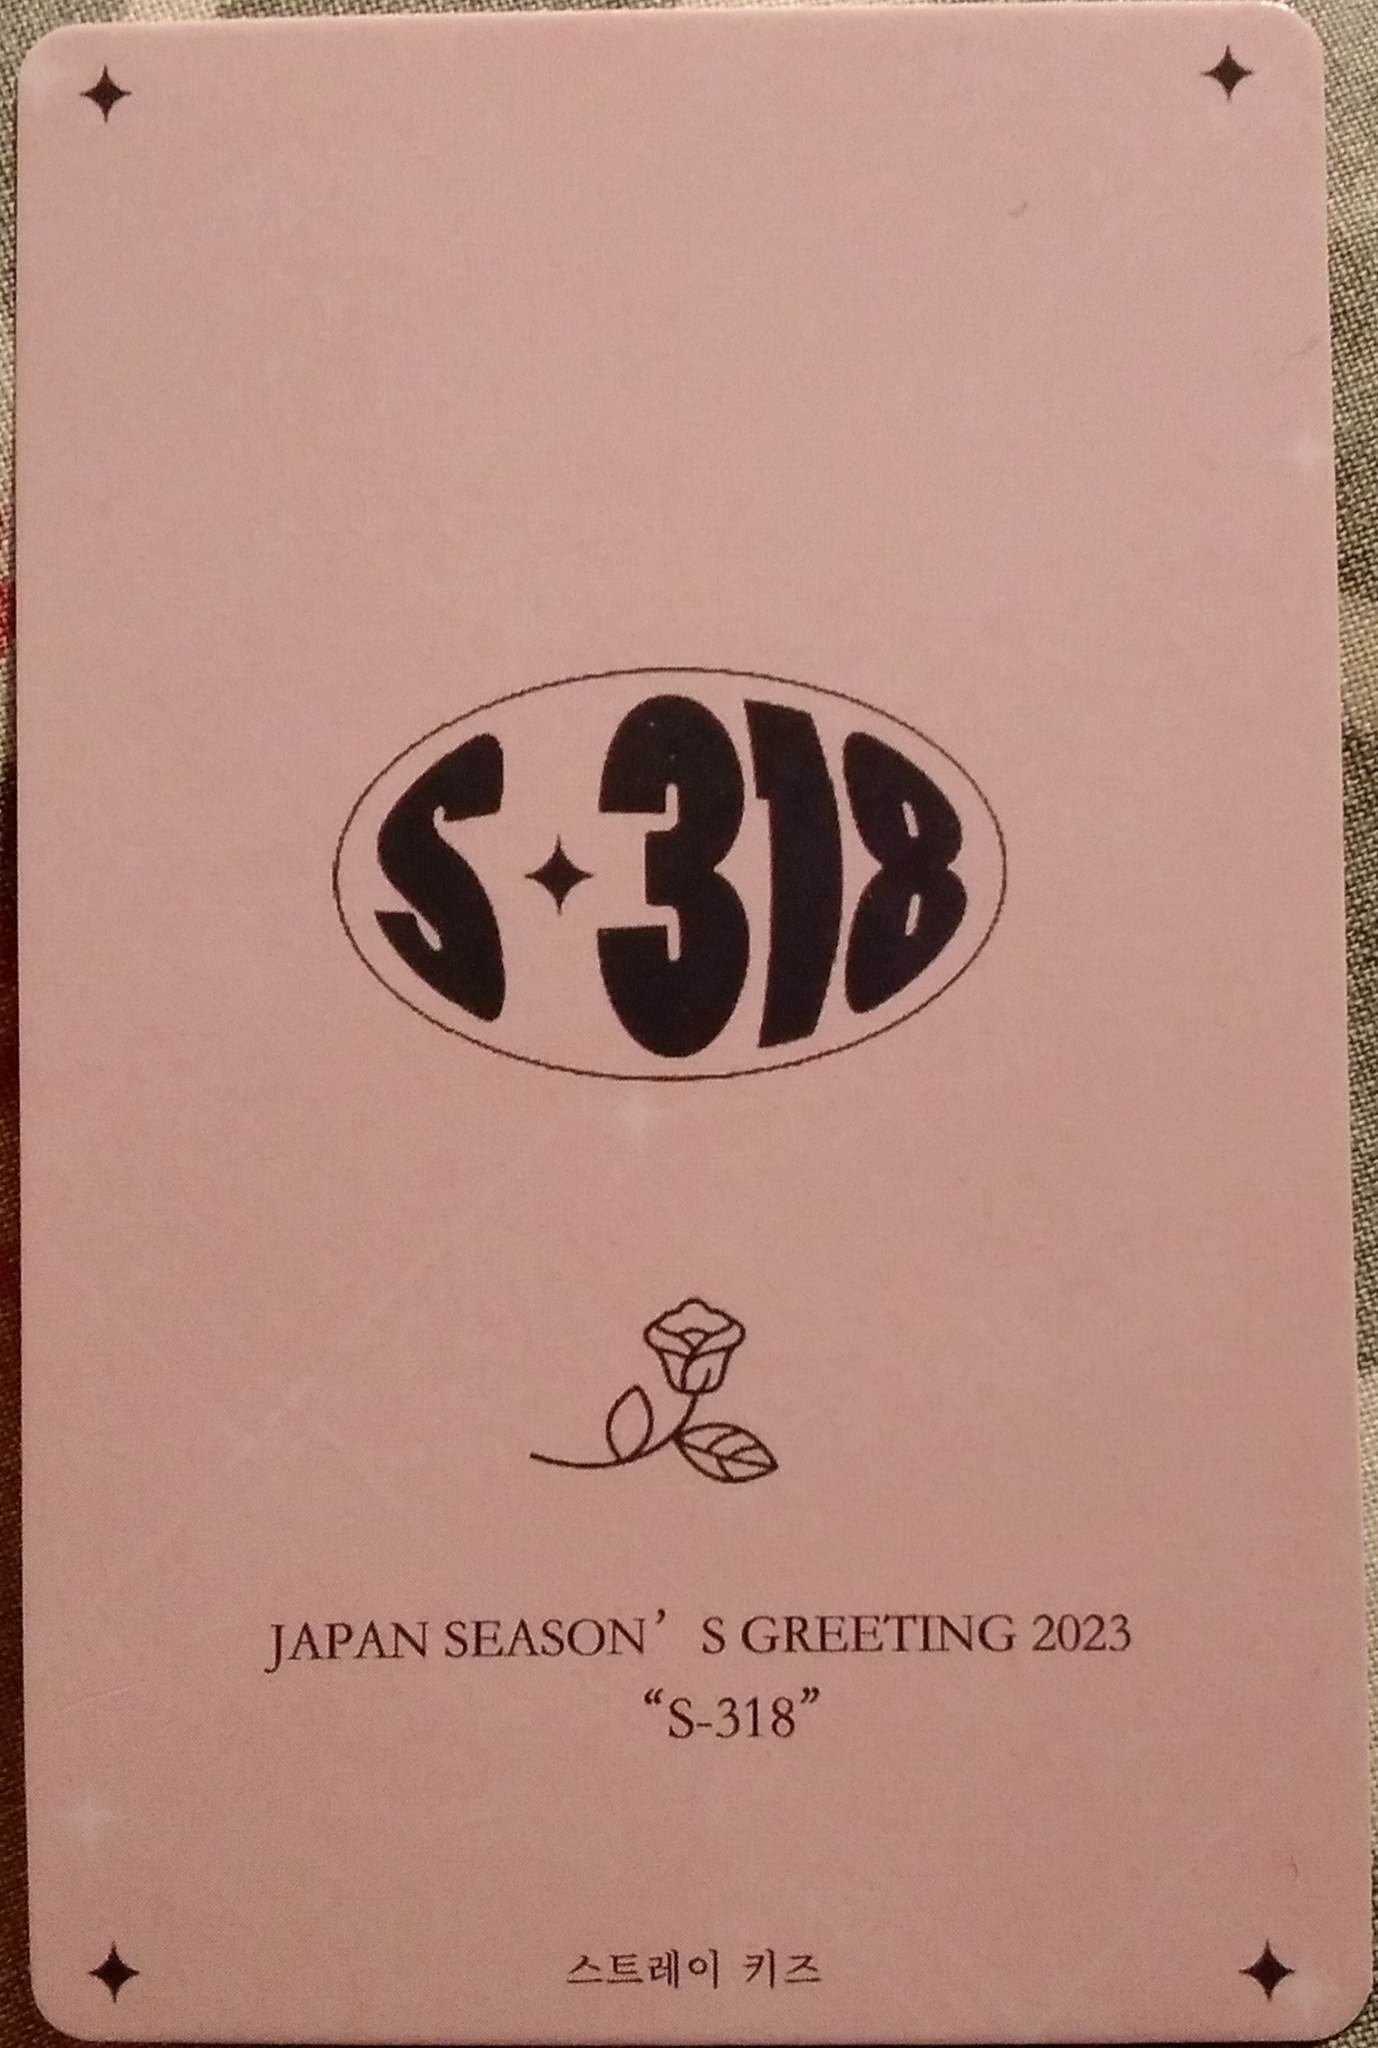 Photocard  STRAYKIDS  Japan season s greetings 2023  "S-318"  Bang chan  Jeong in  Seungmin  Lee know